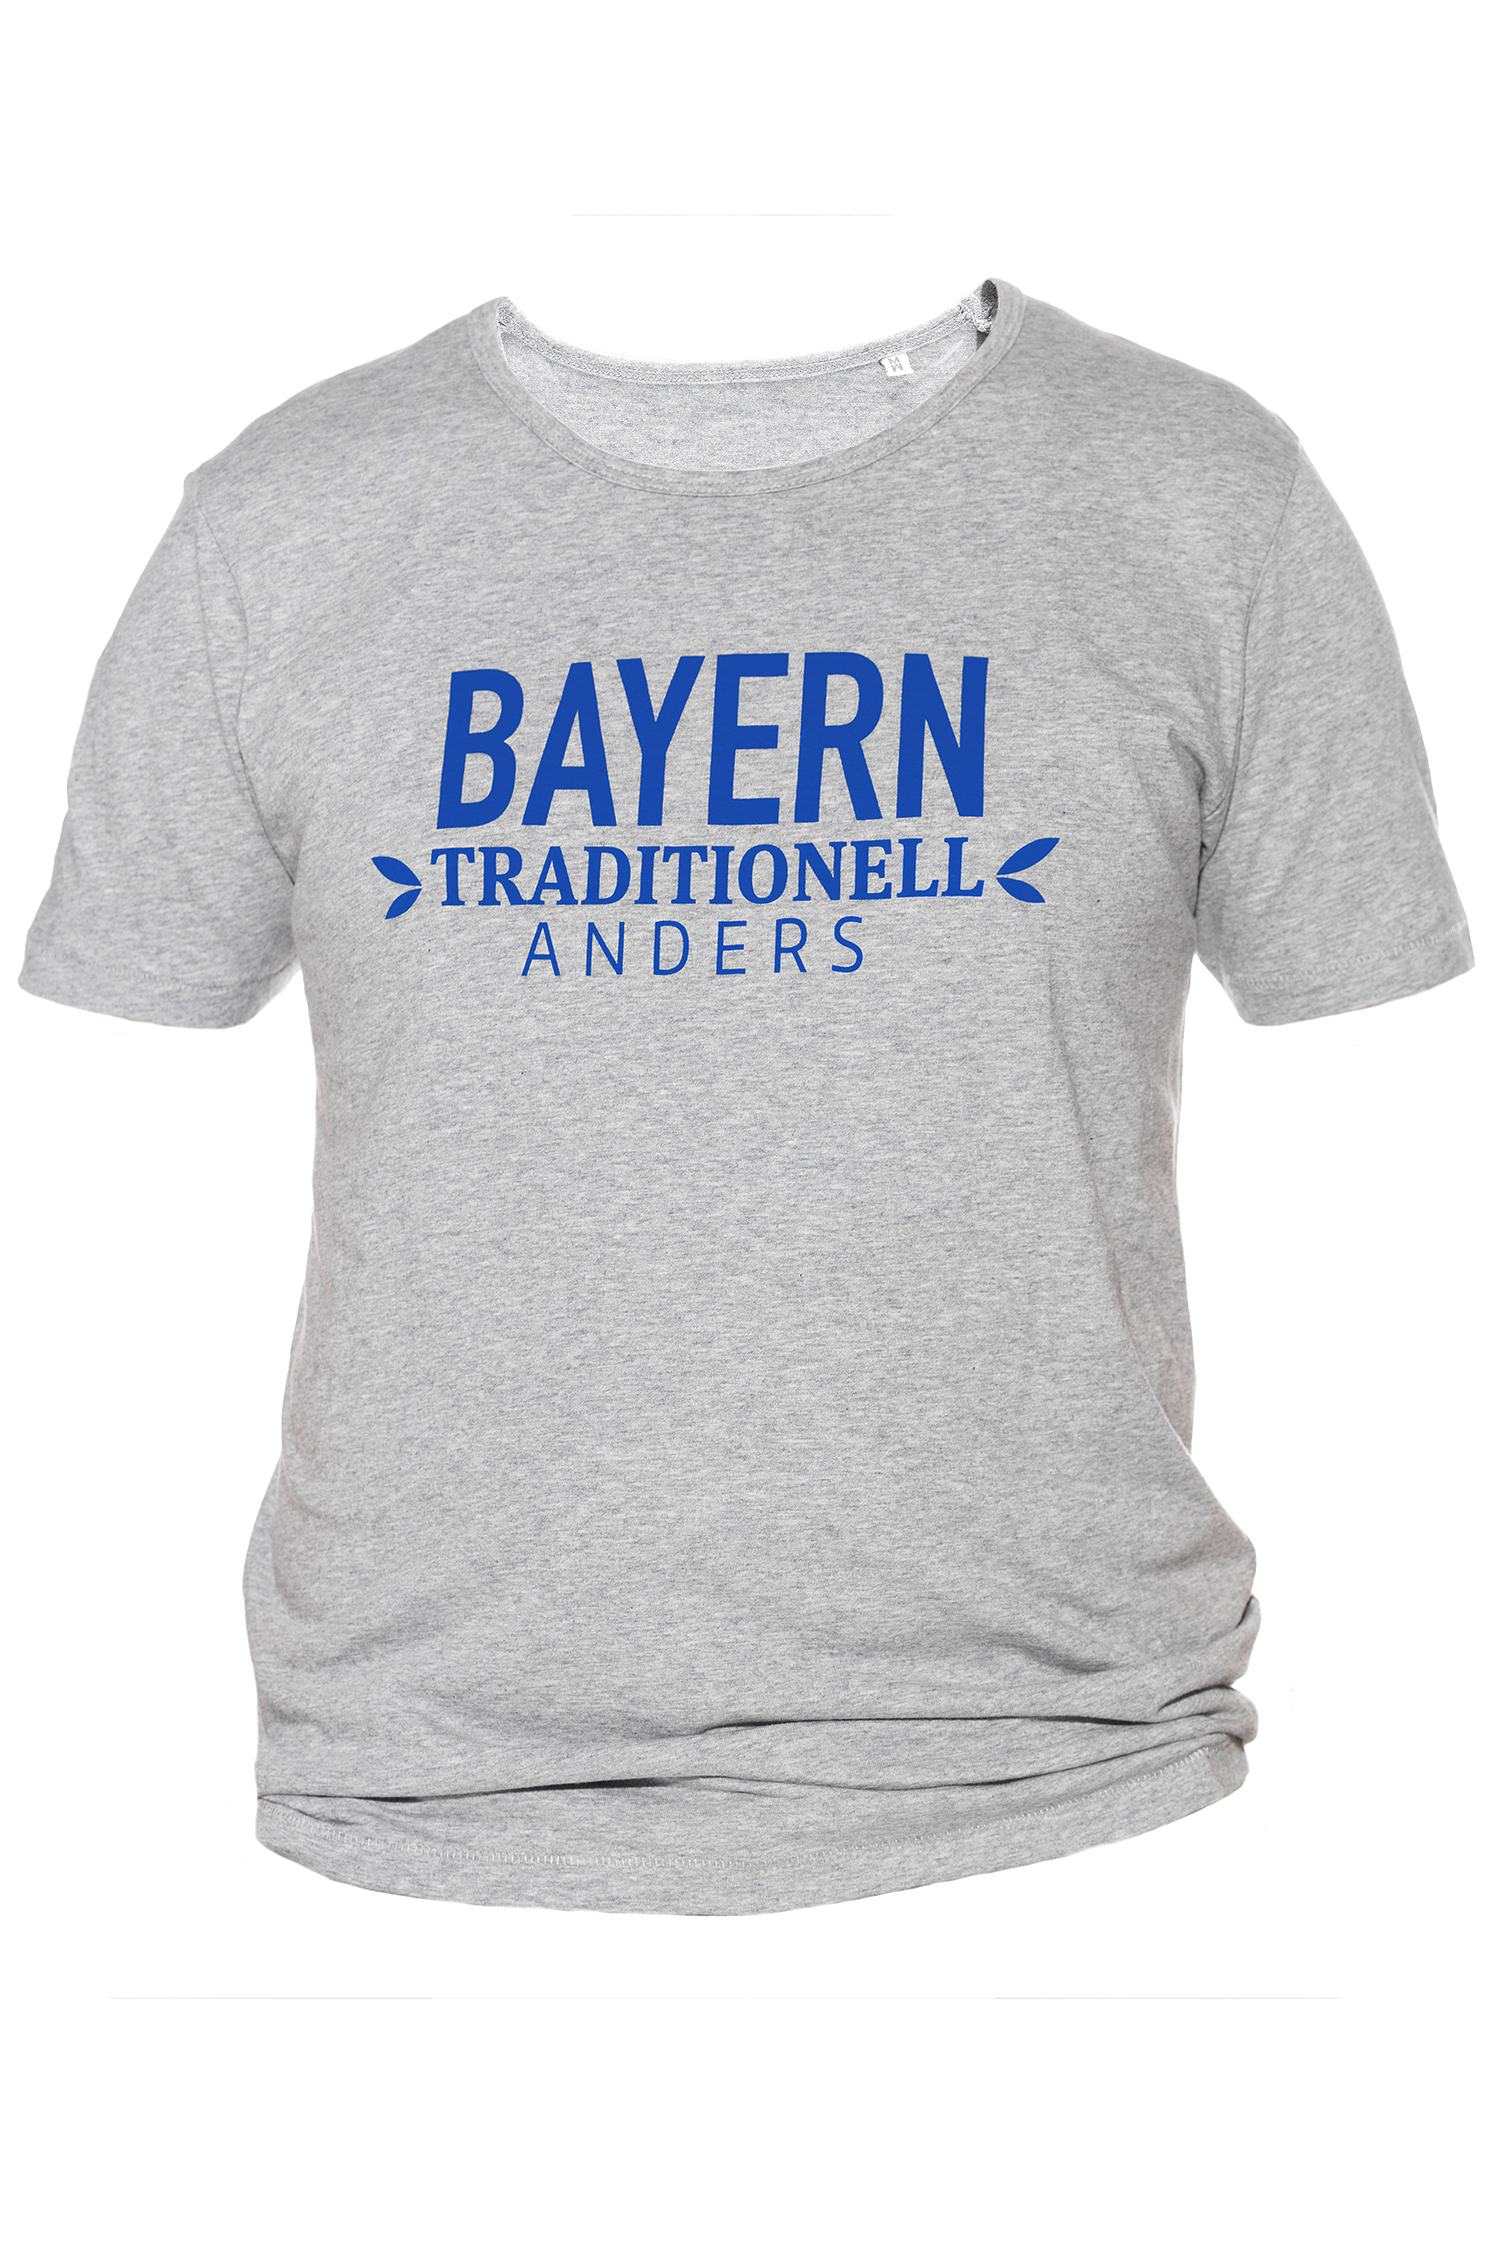 T-Shirt Bayern traditionell anders XL | grau / blau